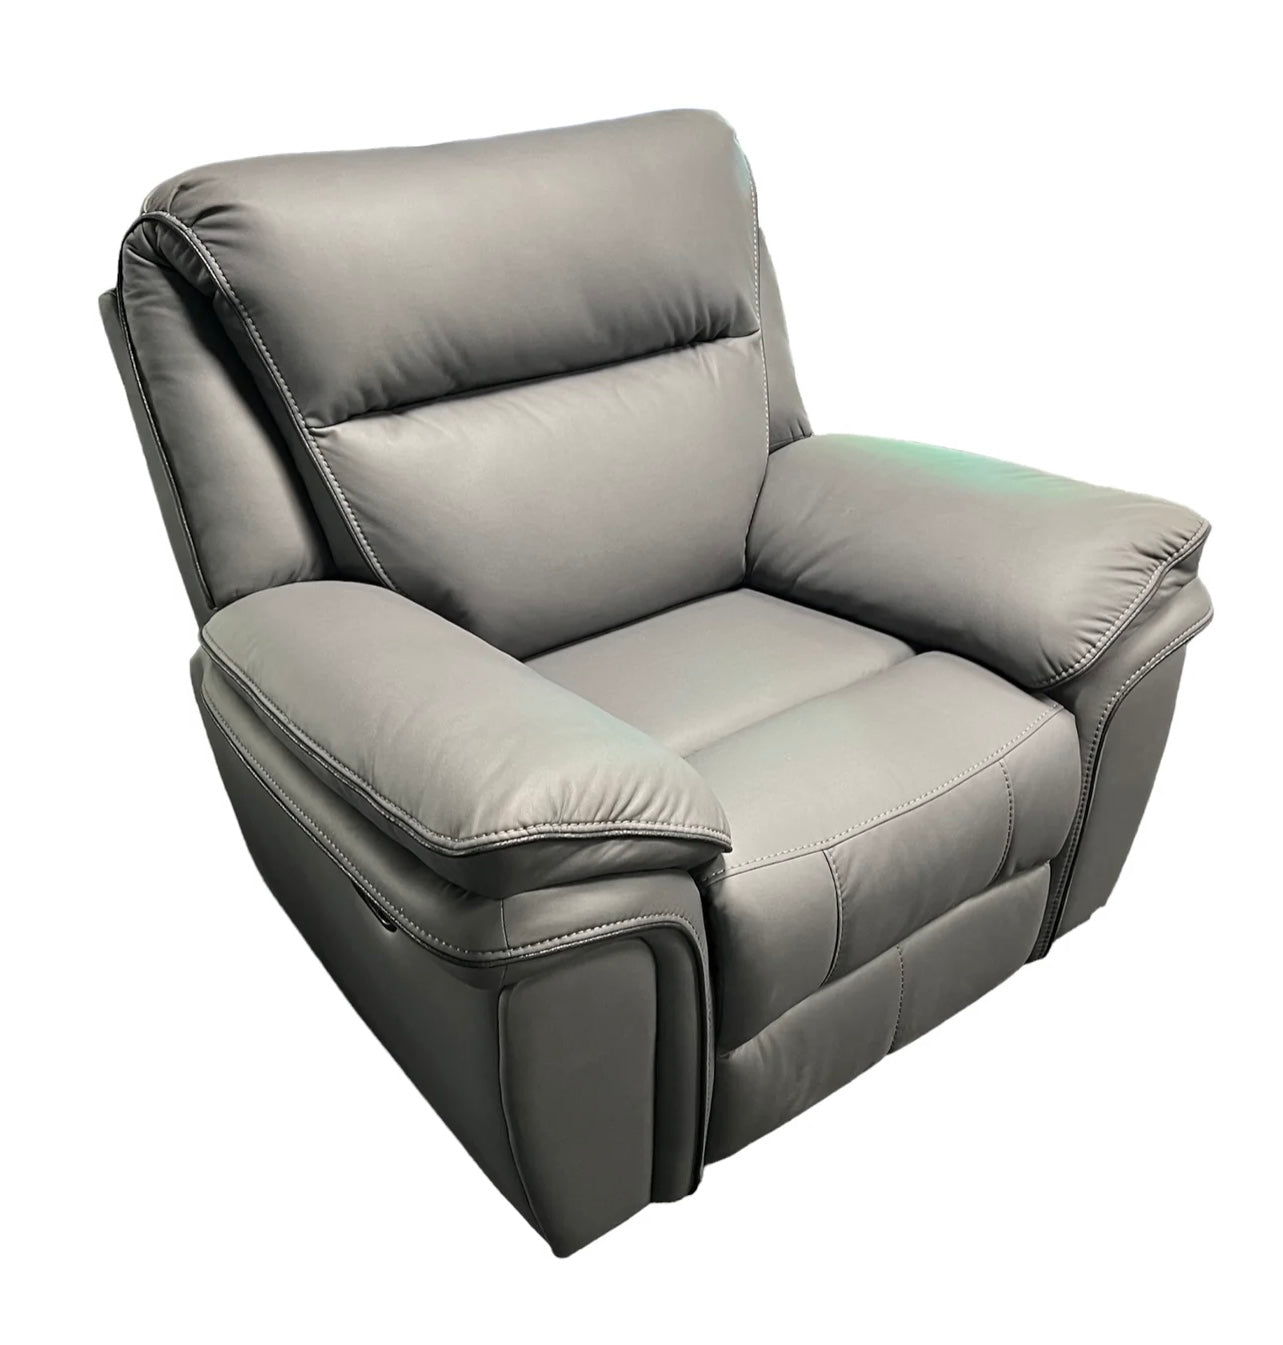 Jenson grey leather air manual recliner sofa